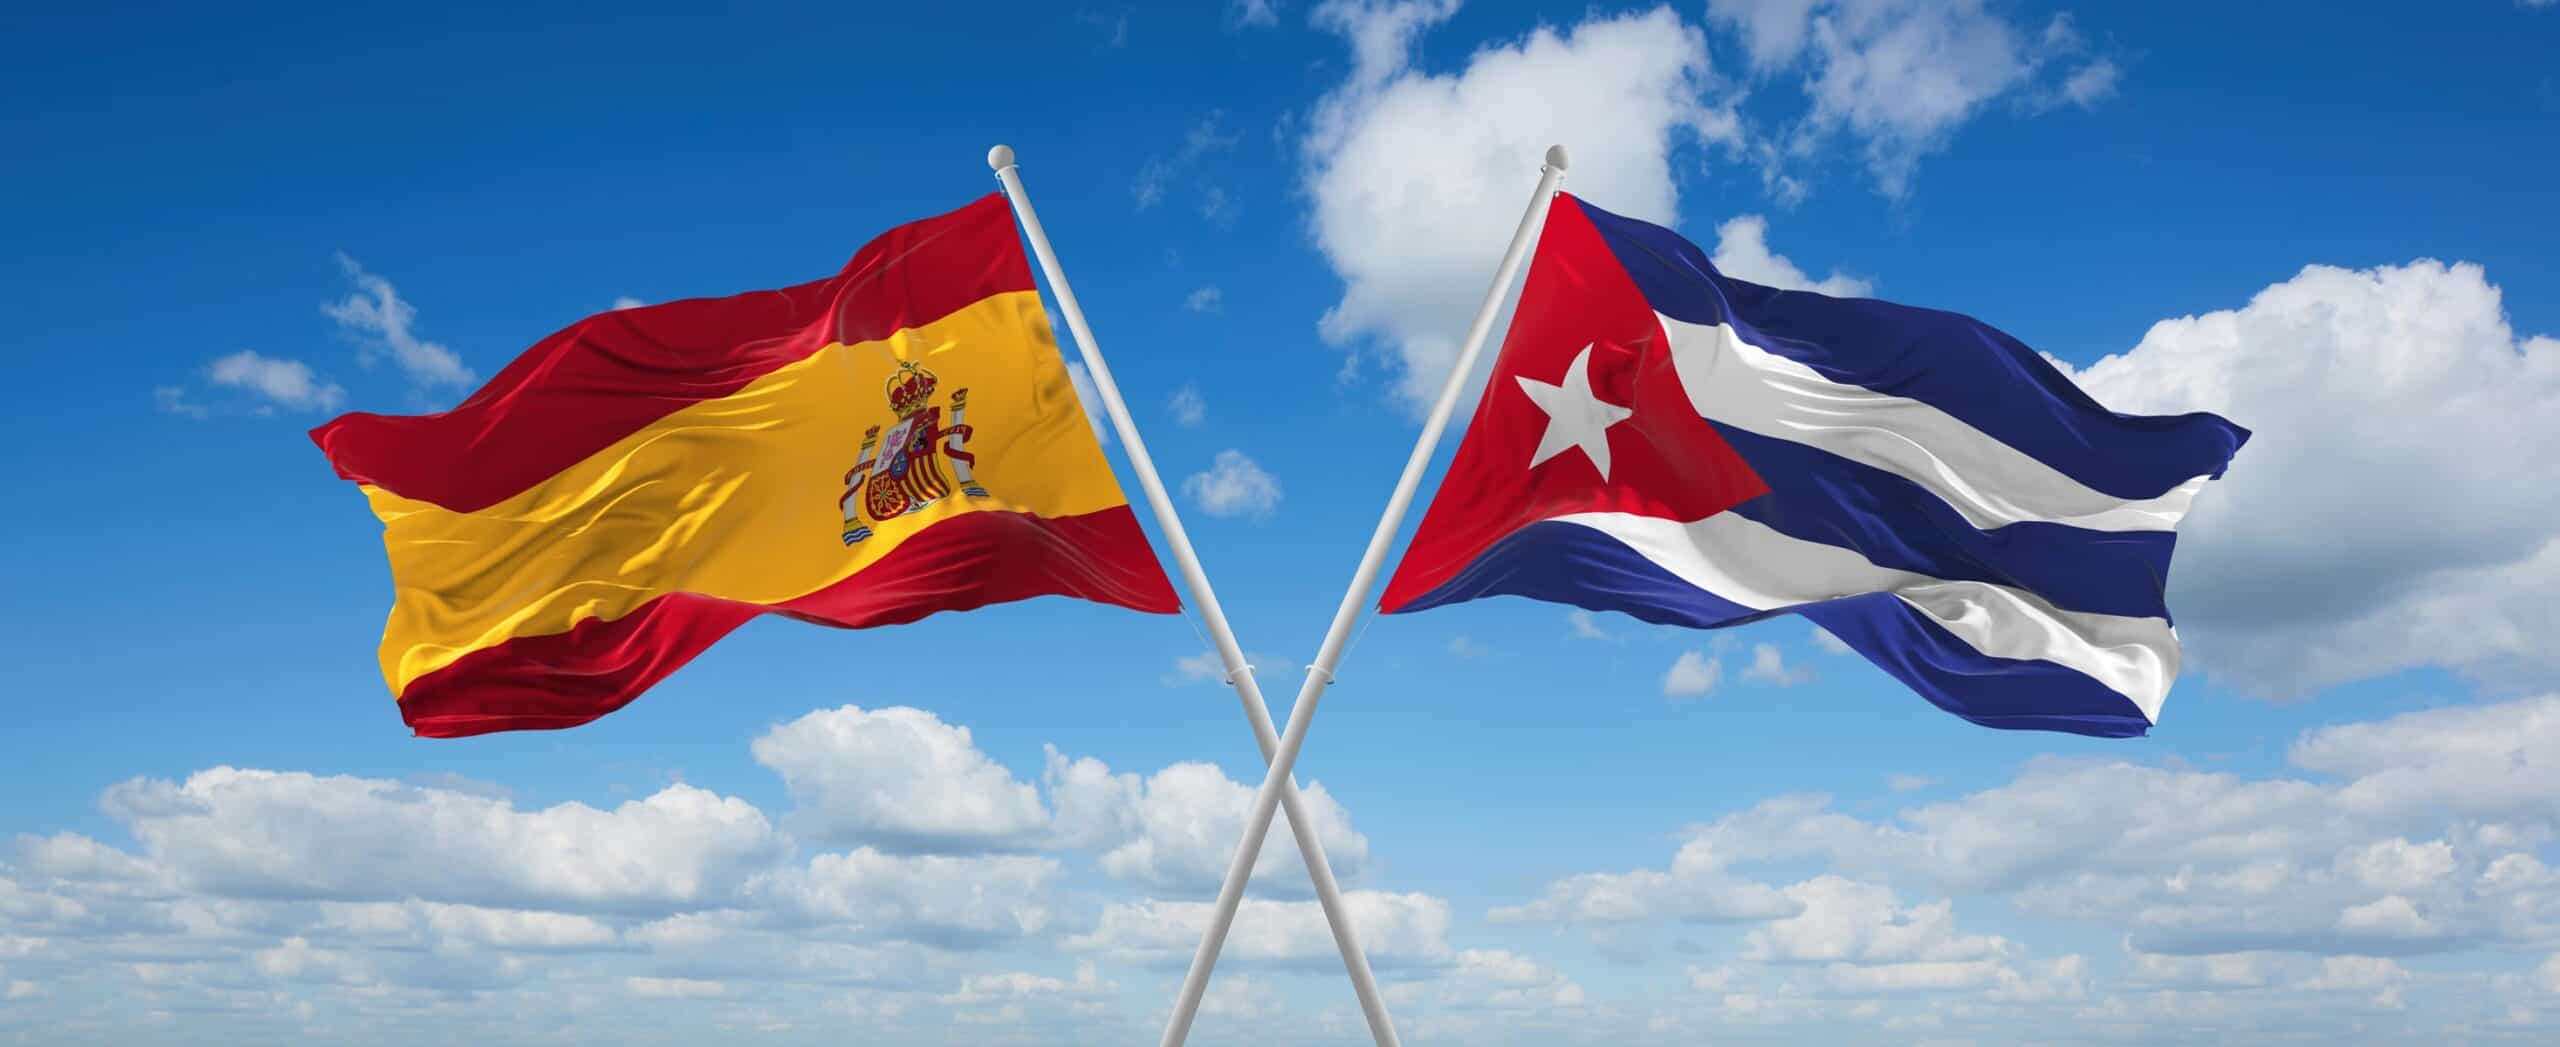 Productos mas Importados a Cuba desde Espana